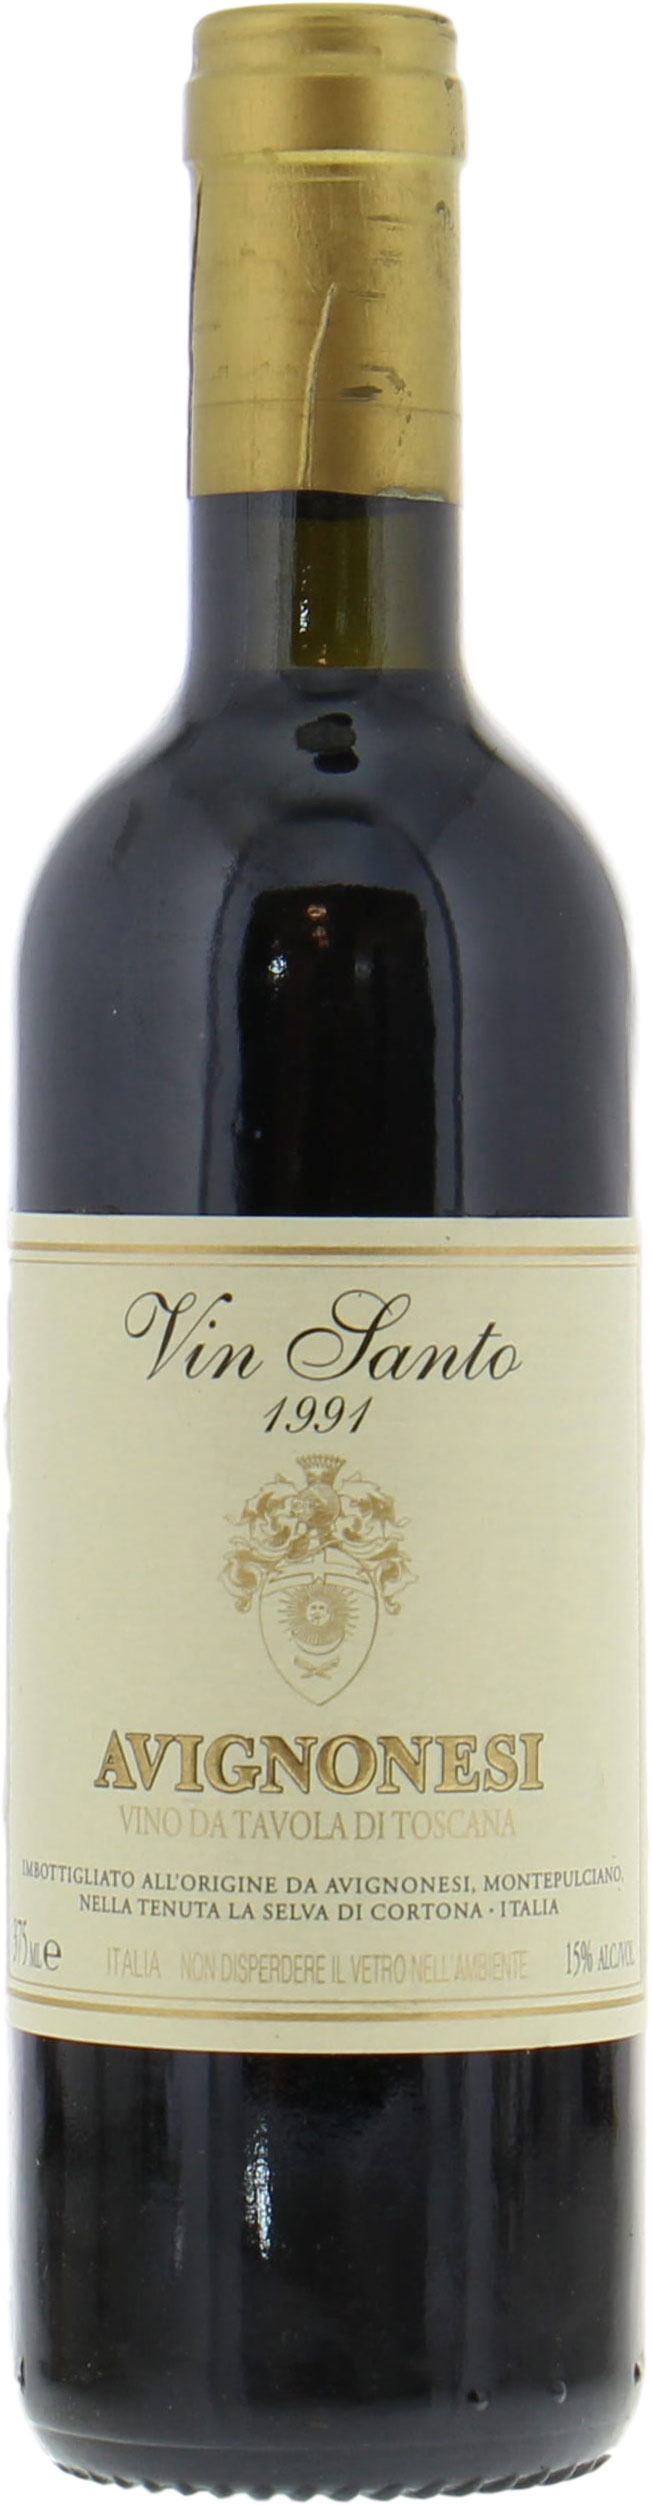 Avignonesi - Vin Santo 1991 Perfect